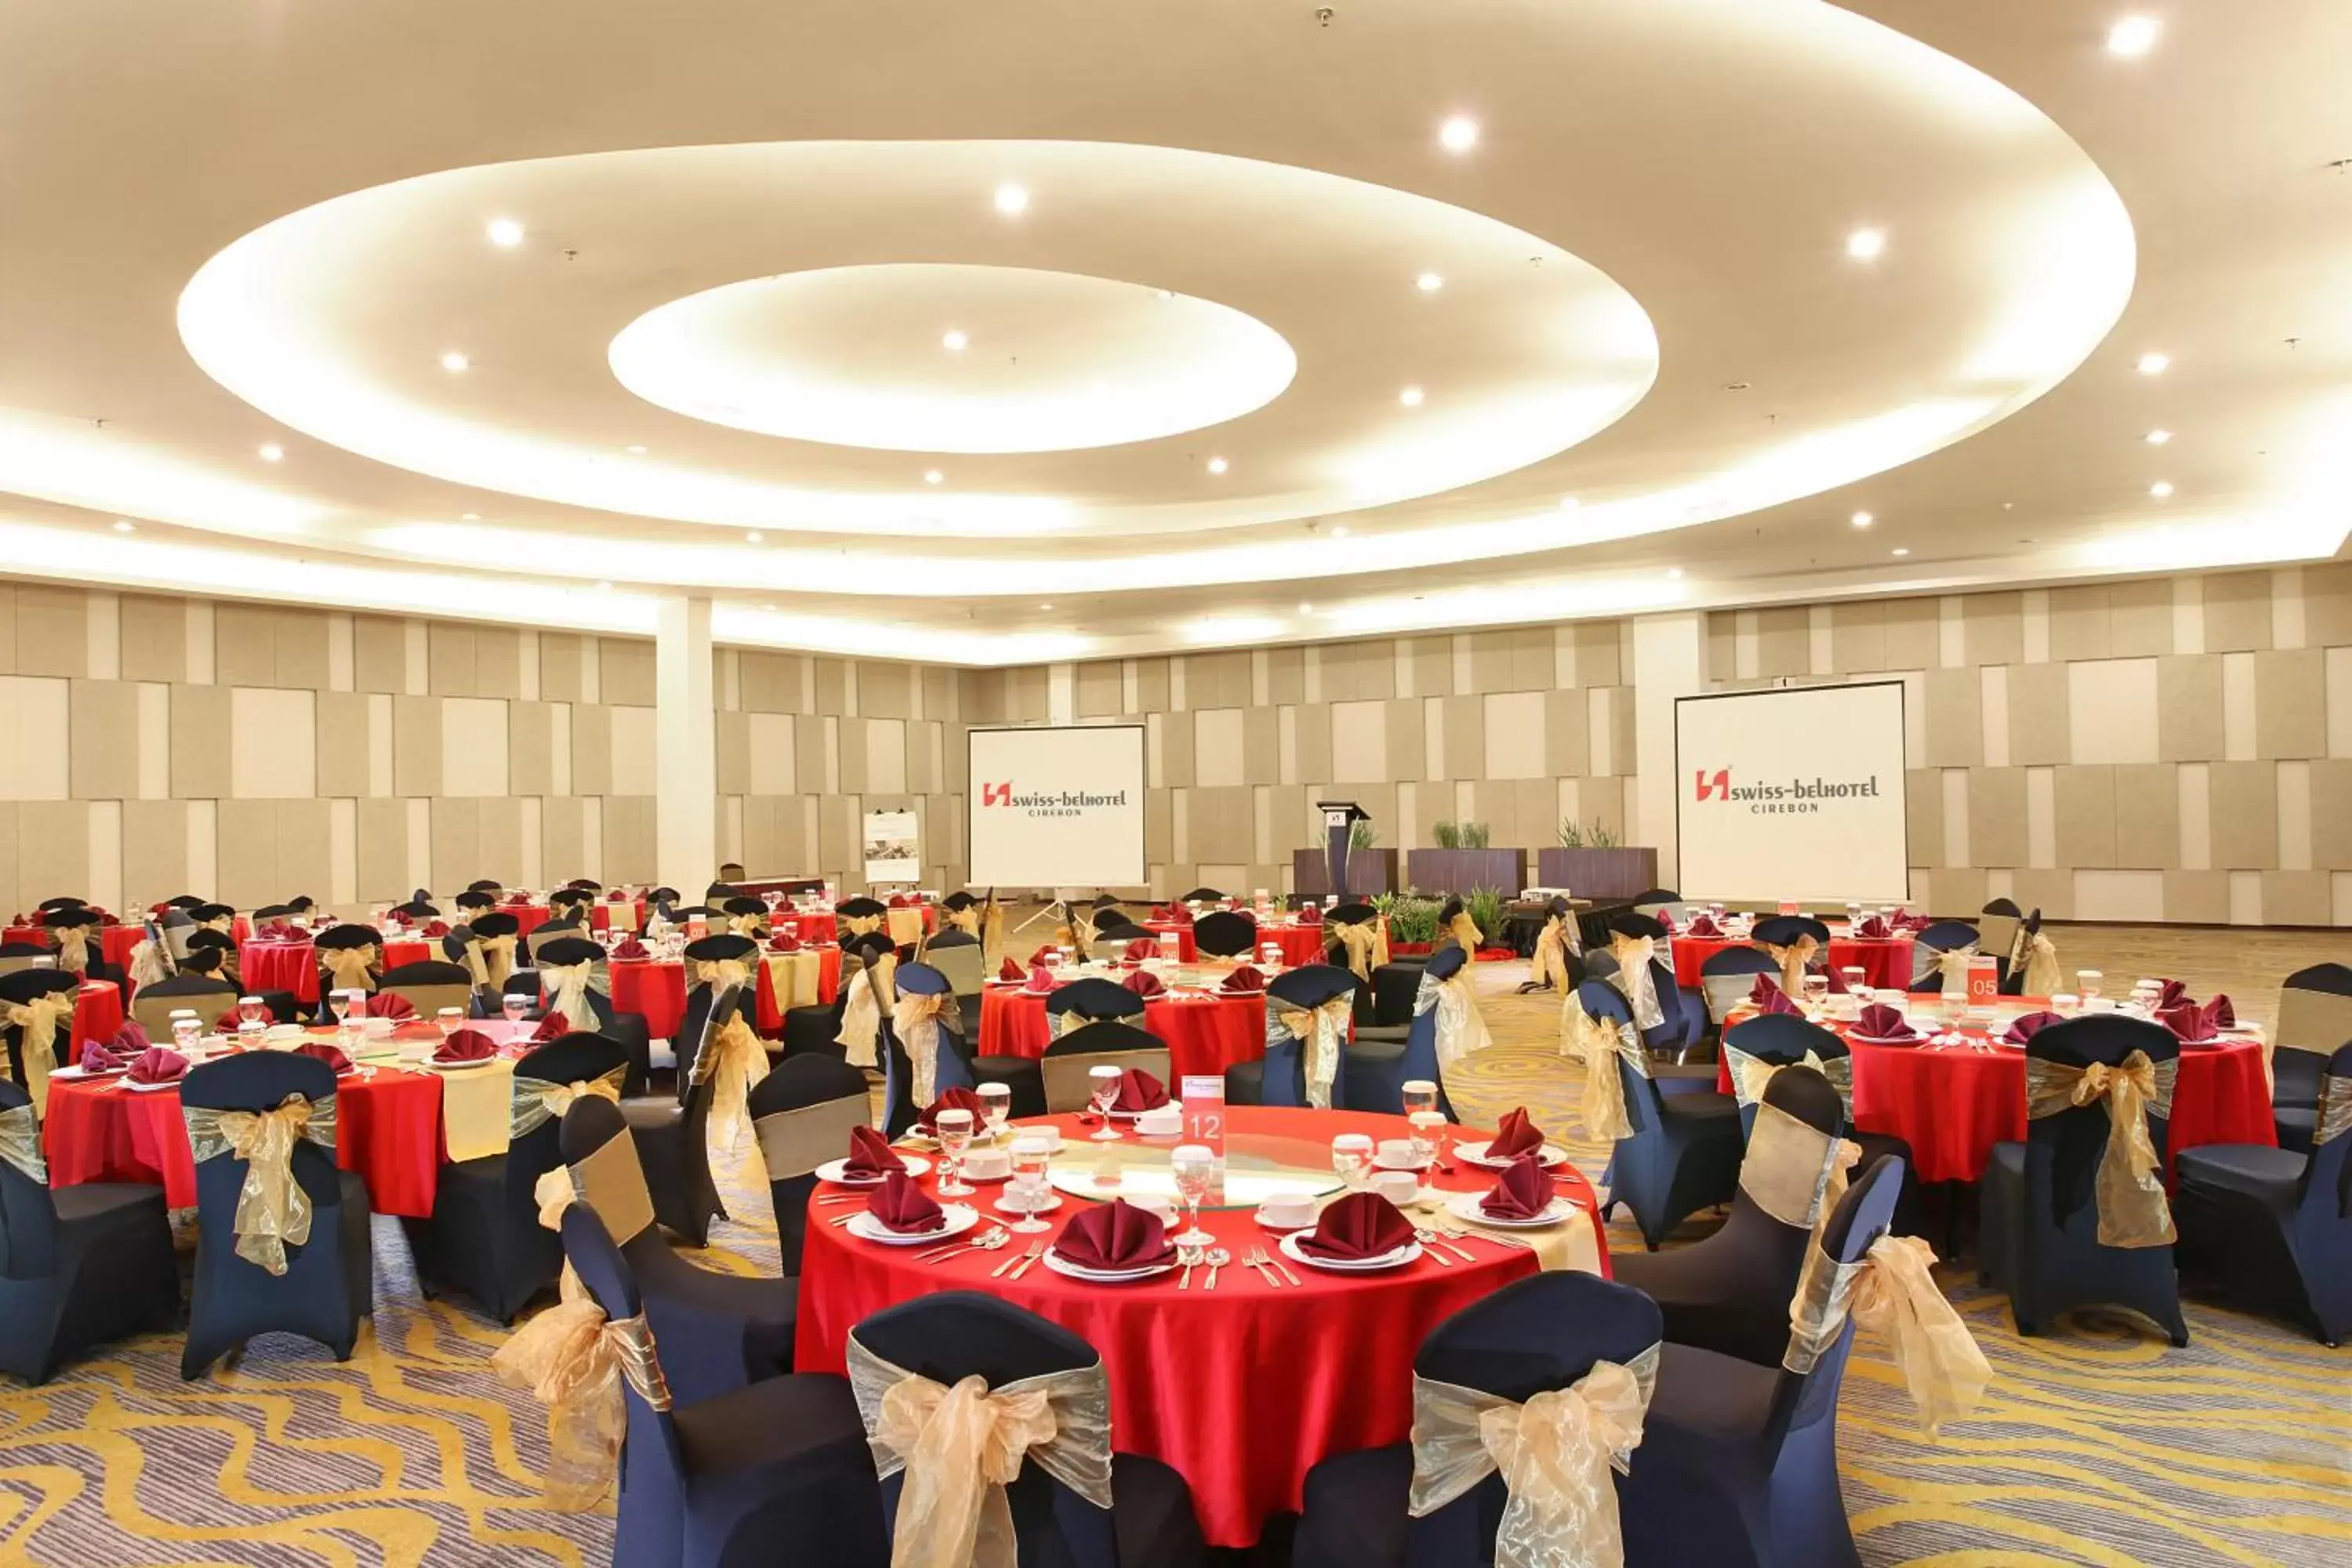 Banquet/Function facilities, Banquet Facilities in Swiss-Belhotel Cirebon